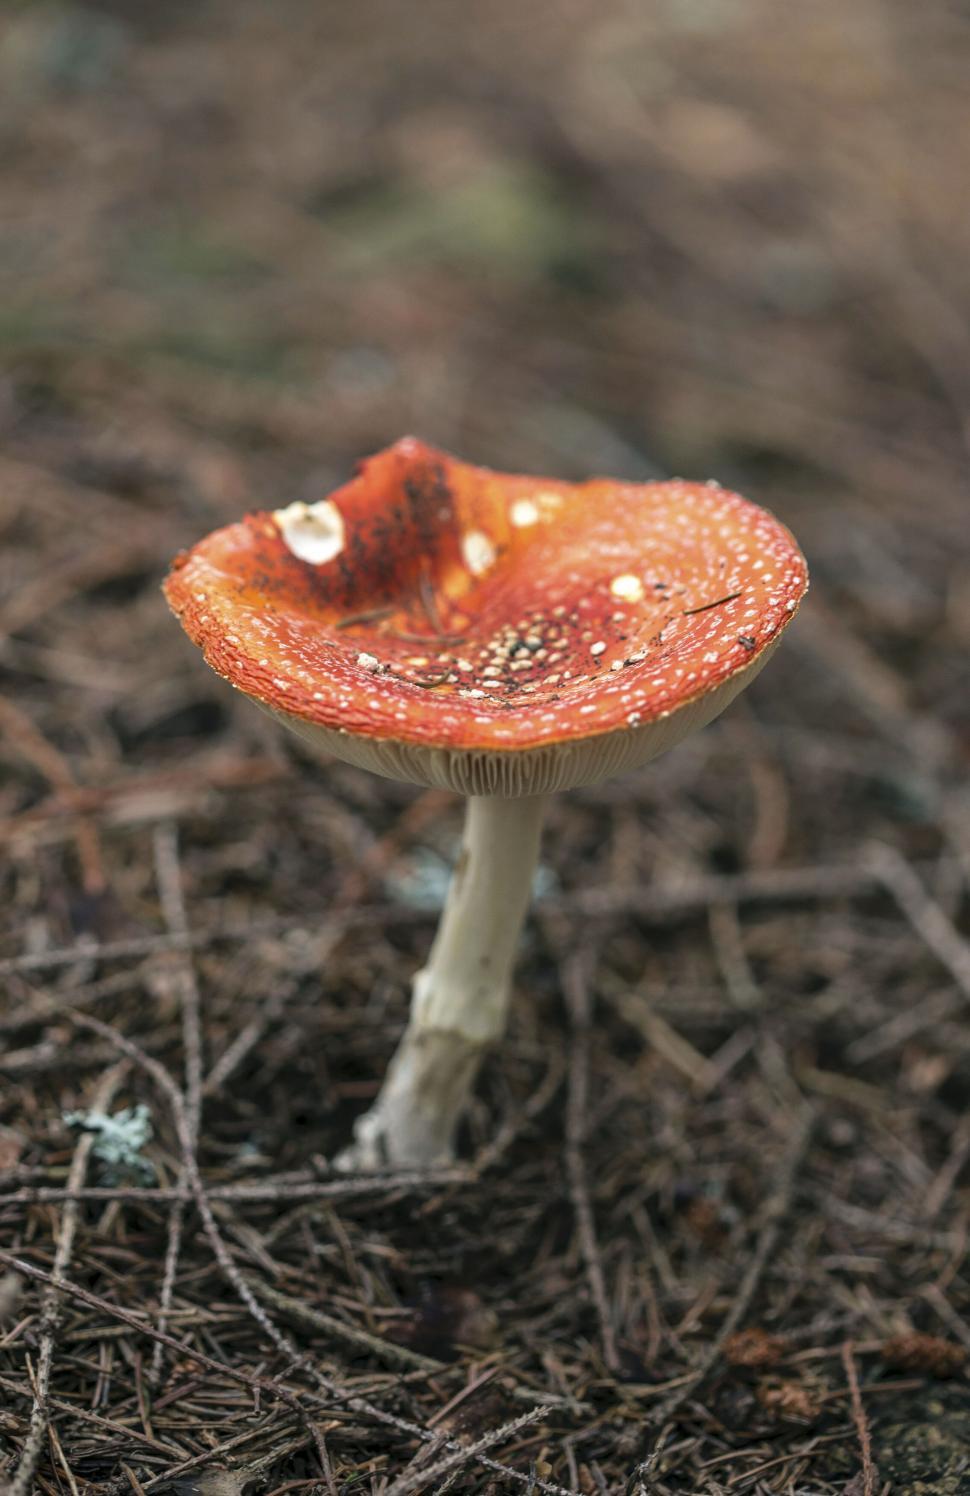 Free Image of Toadstool mushroom in the underbrush 